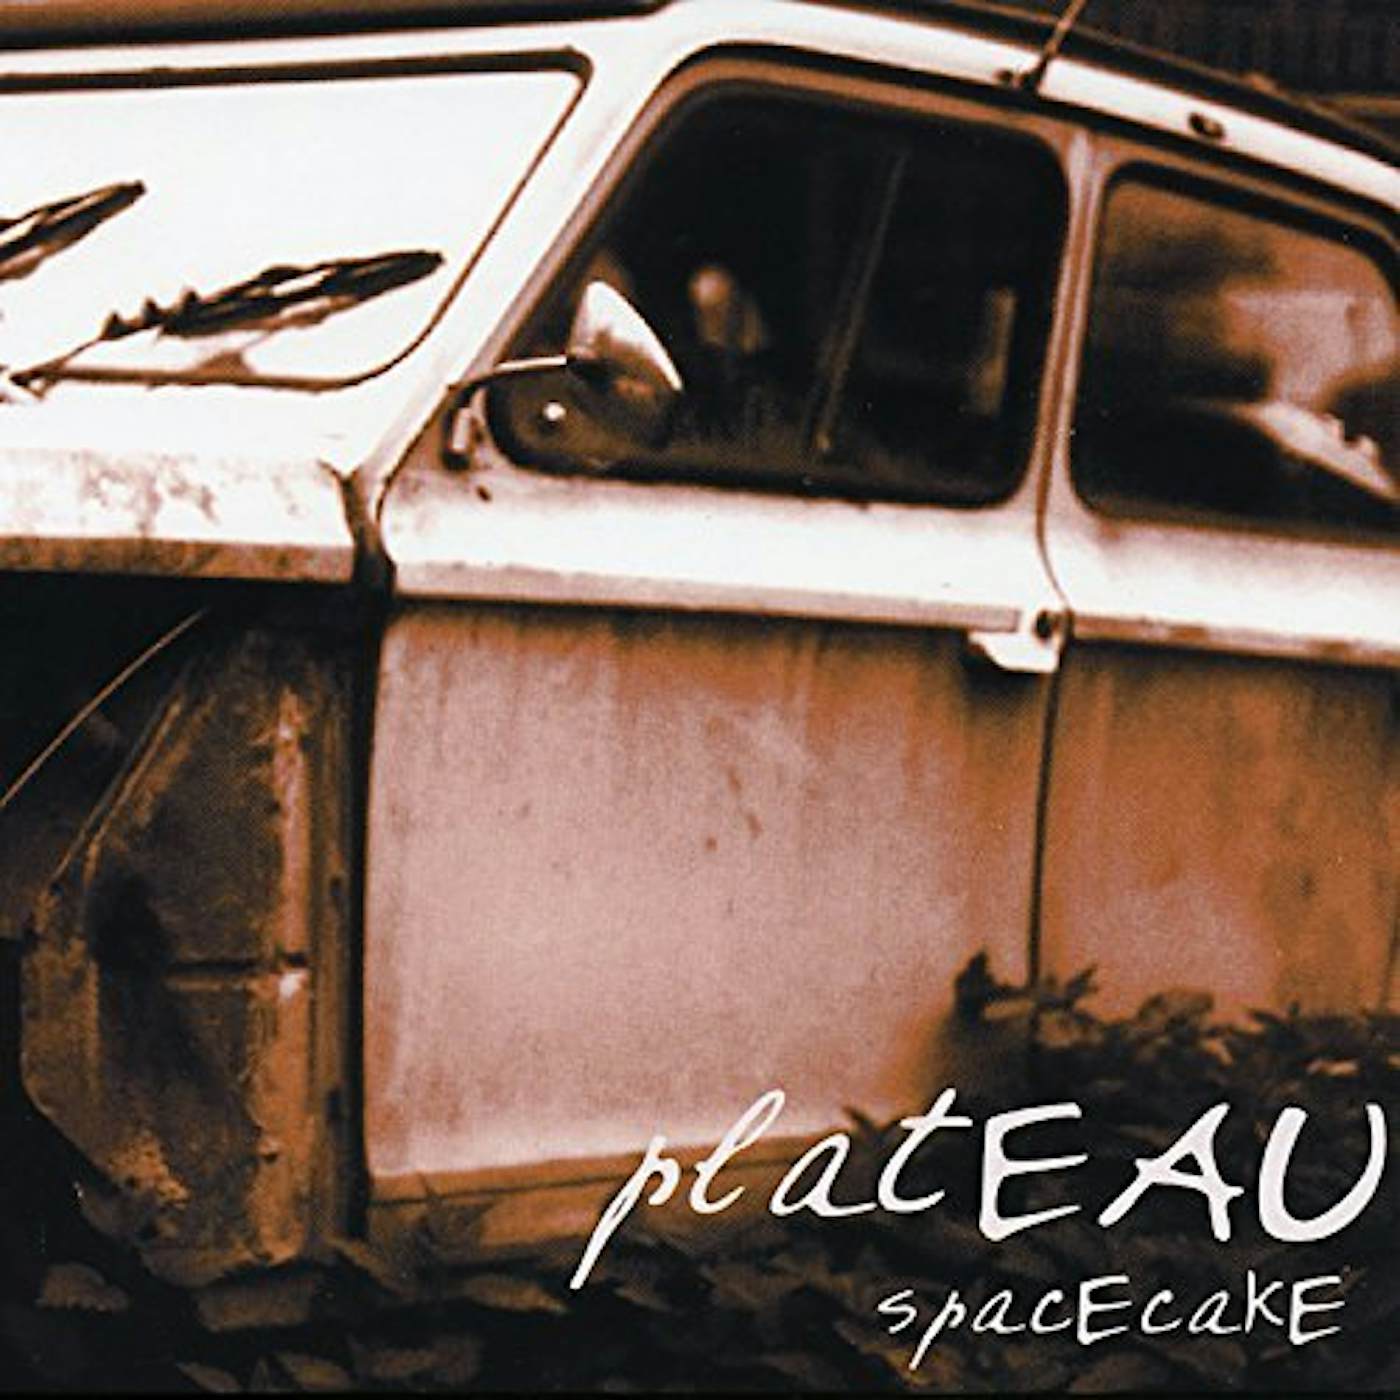 Plateau Spacecake Vinyl Record